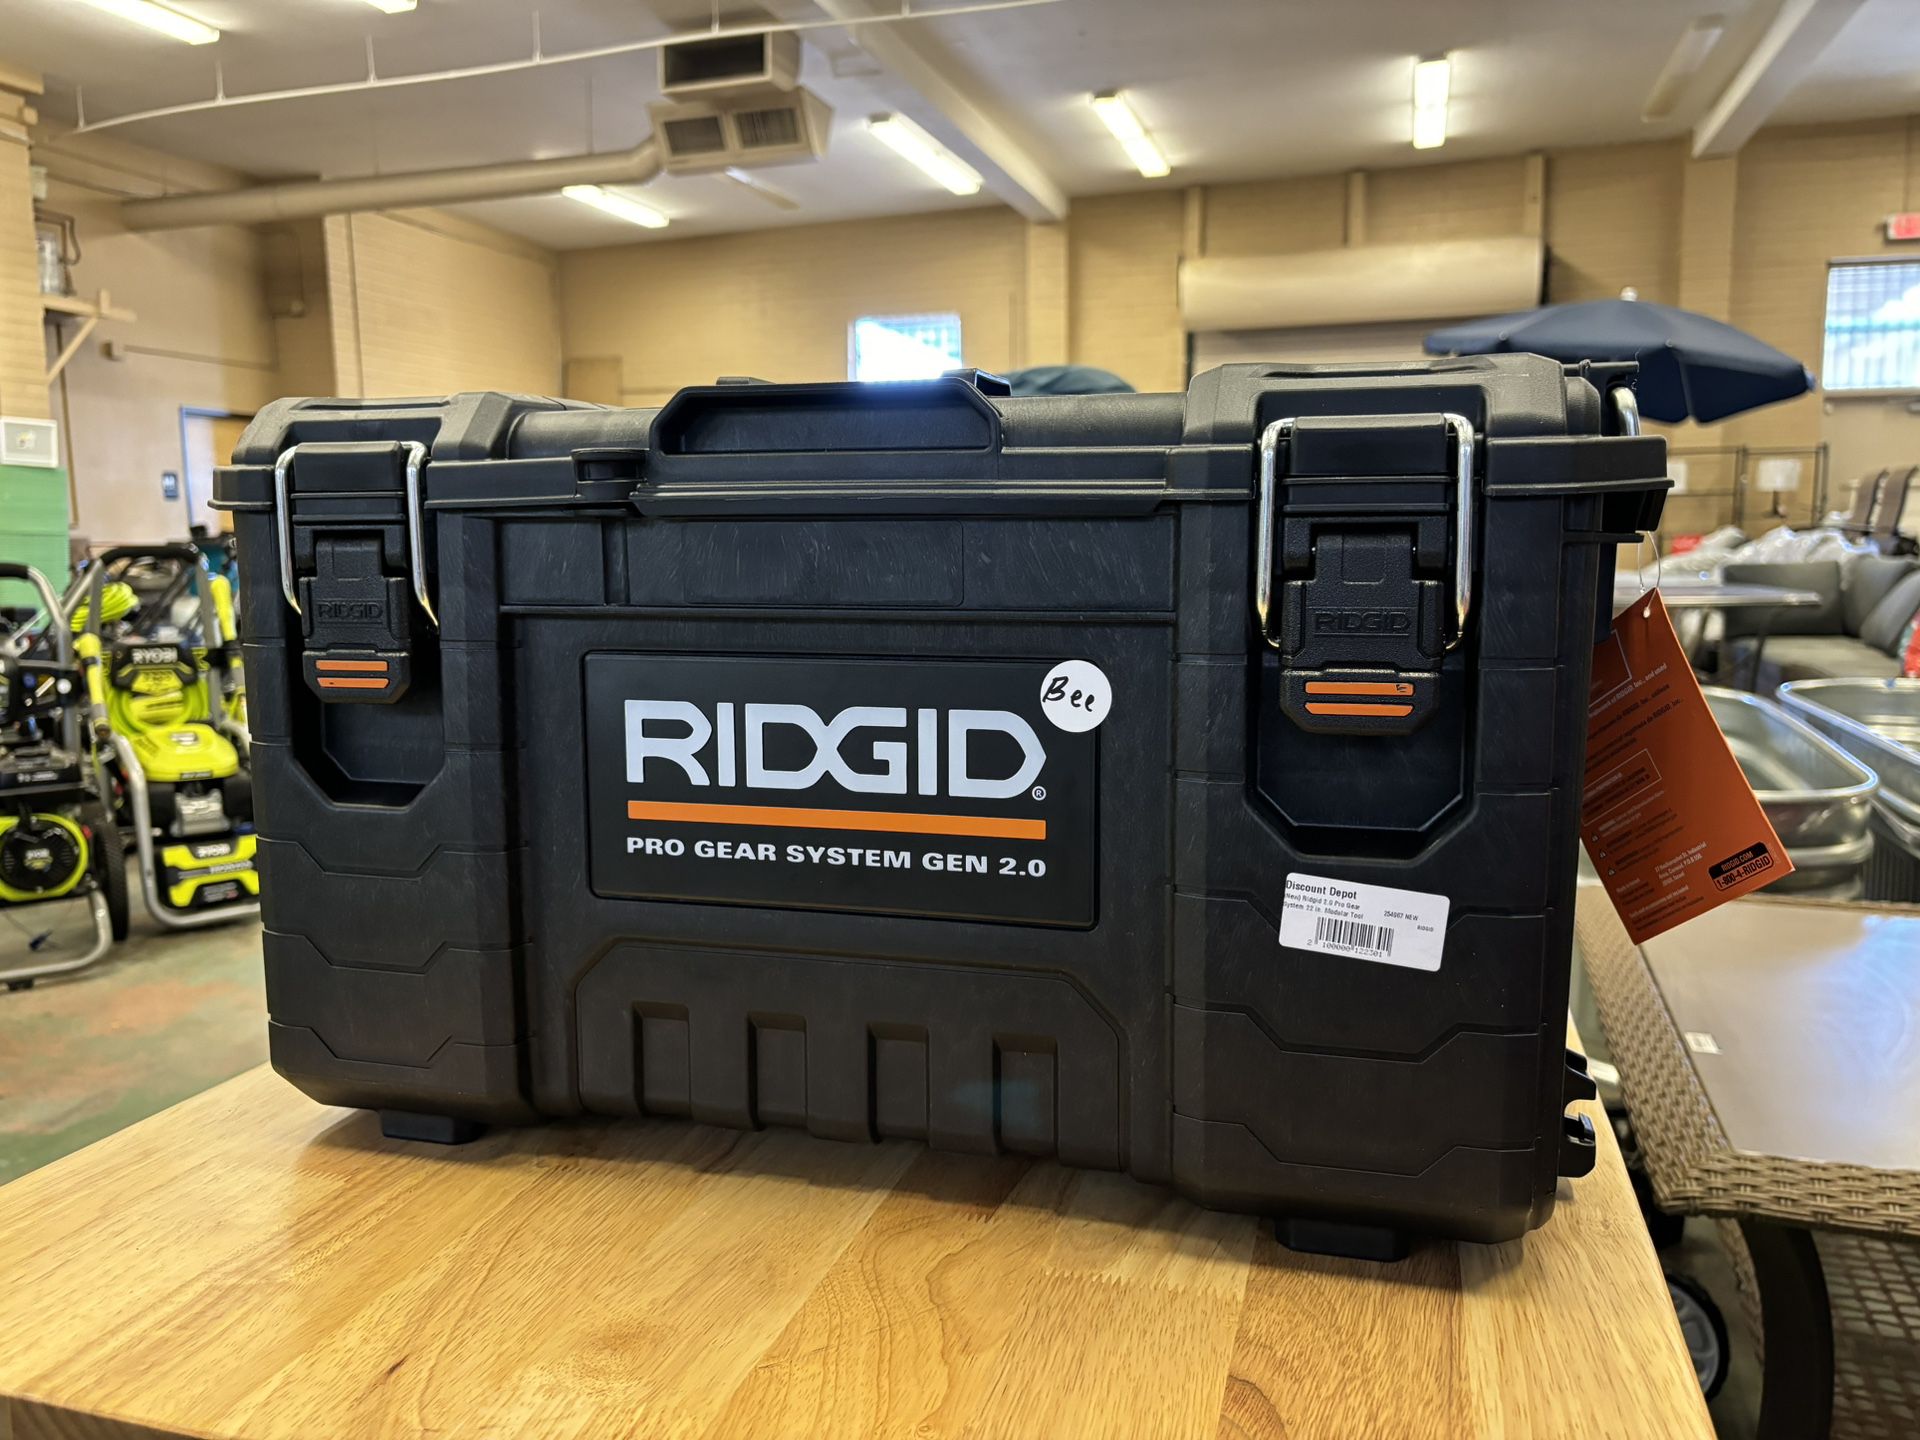 (New) Rigid 2.0 Pro Gear System 22 In. Modular Tool Box Storage 